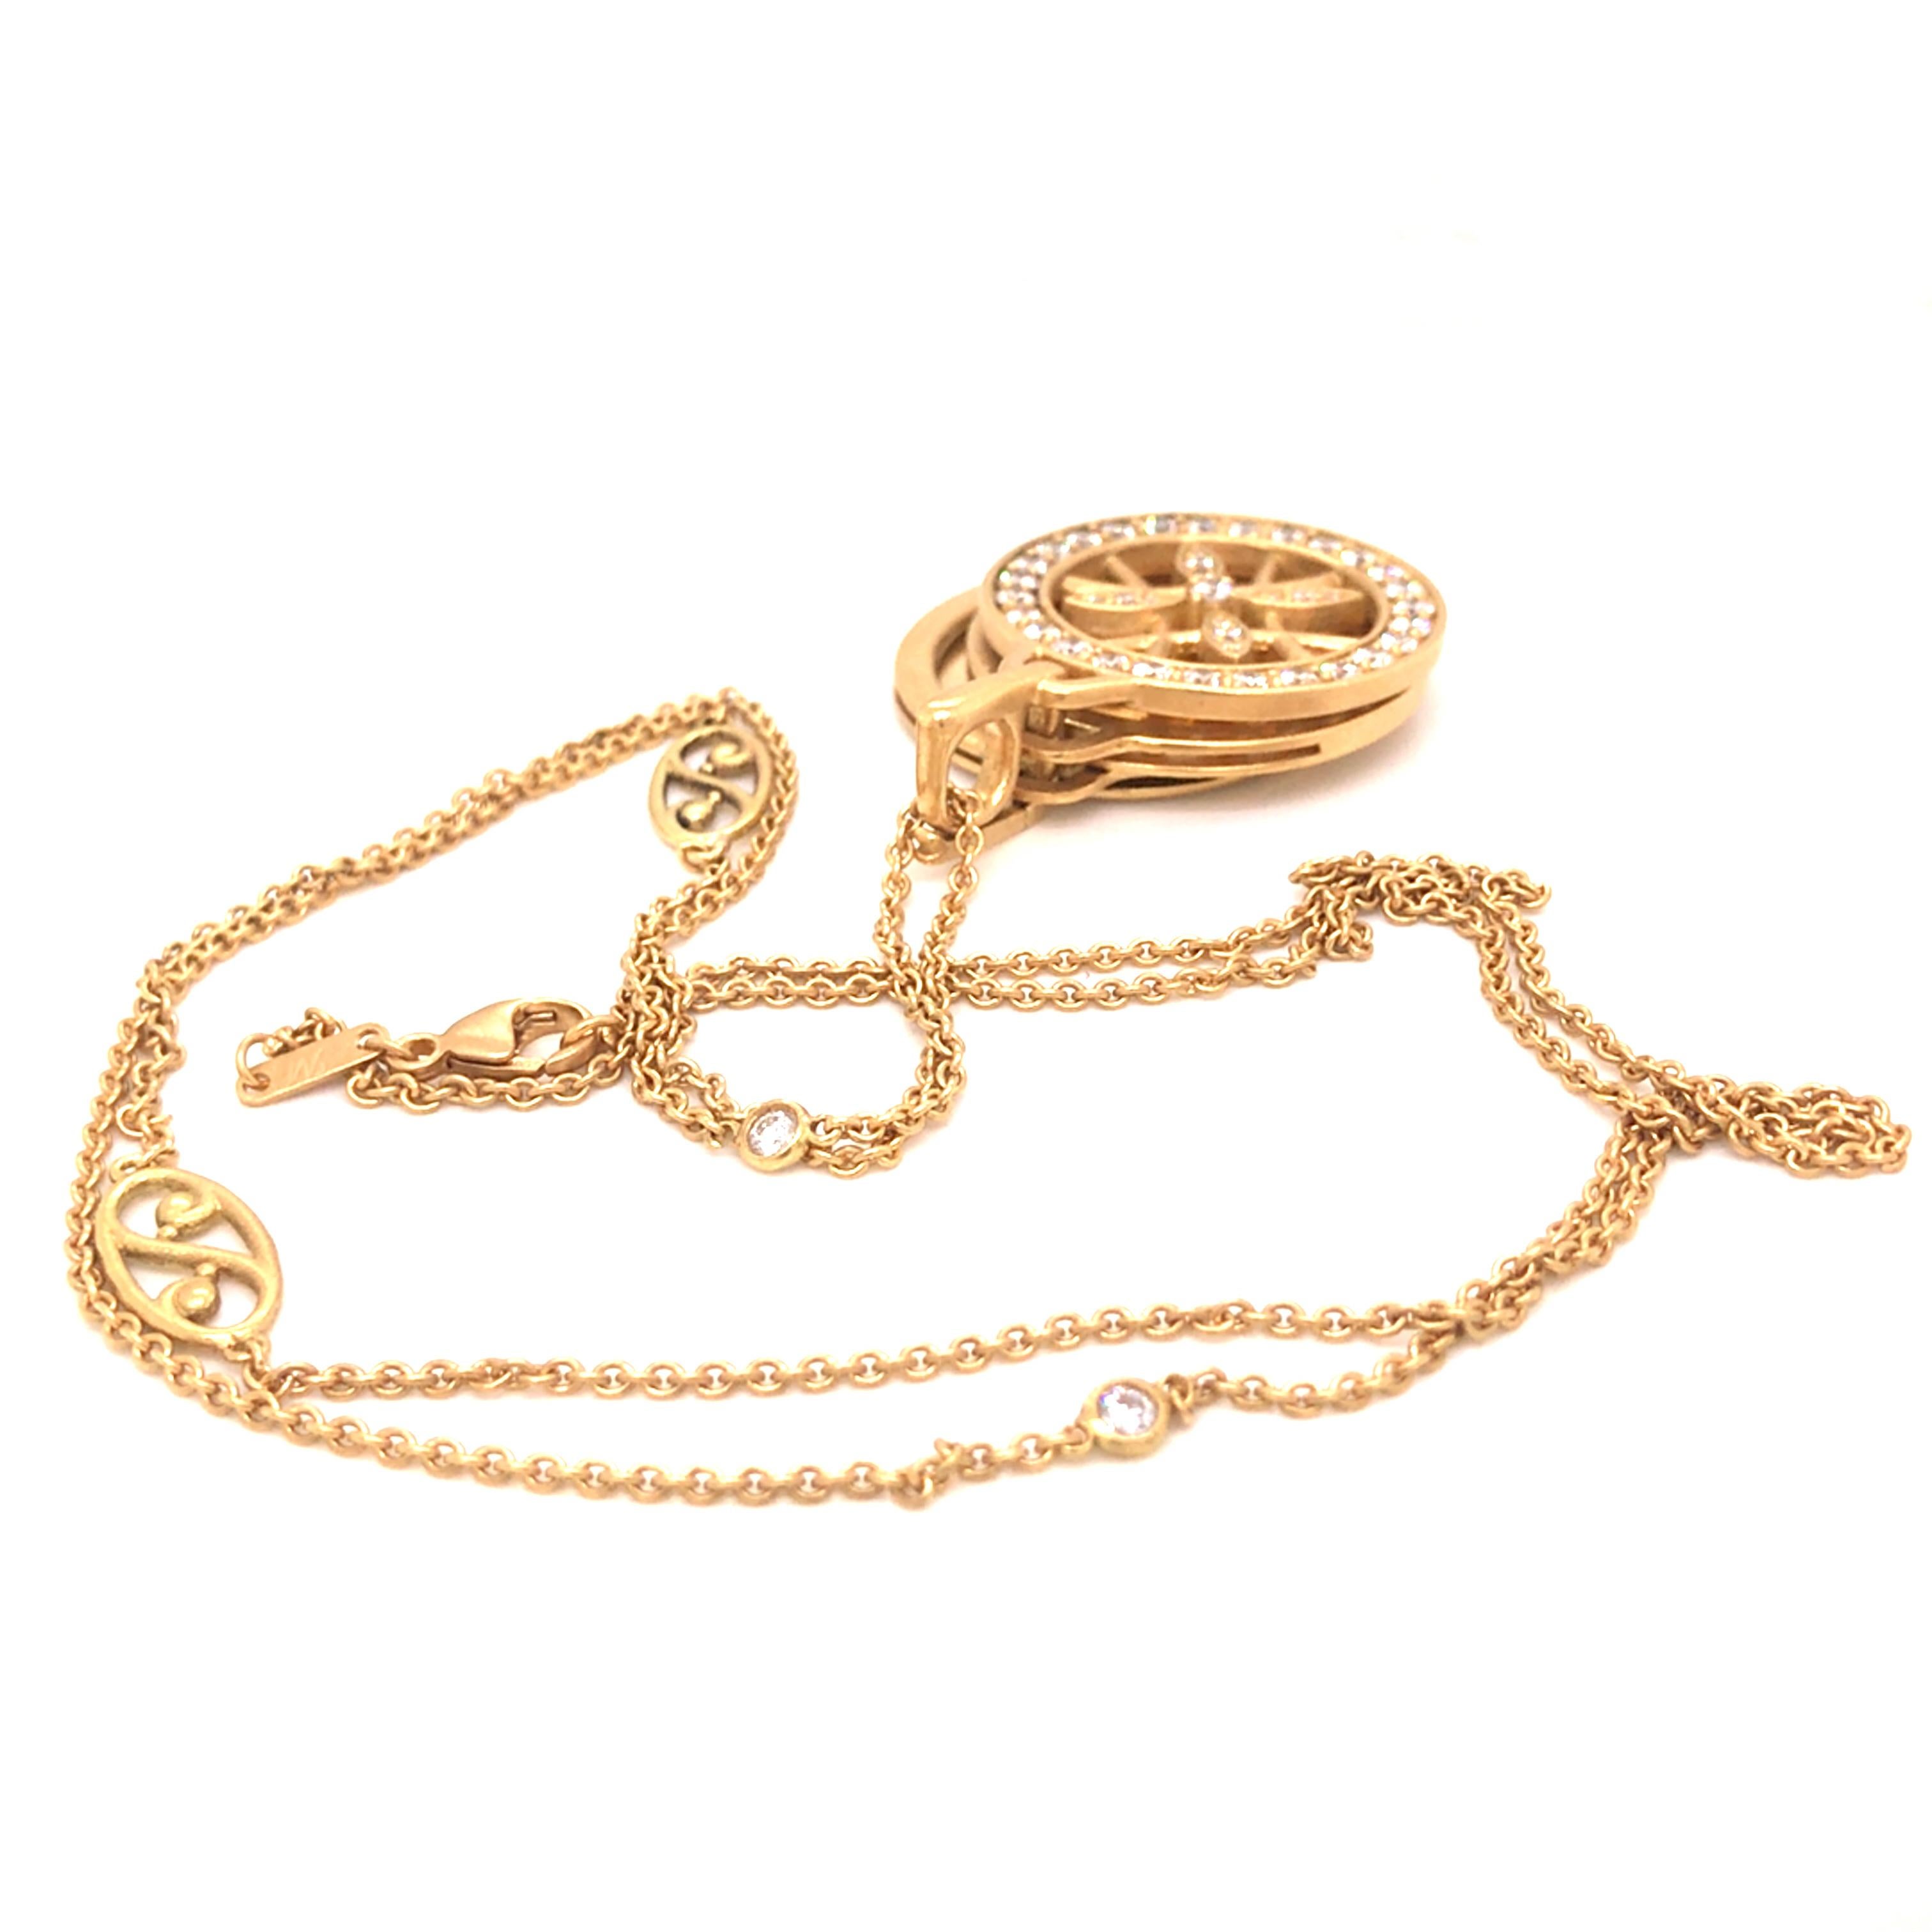 18K Vintage Stackable Diamond Locket Pendant Station Necklace Yellow Gold 3